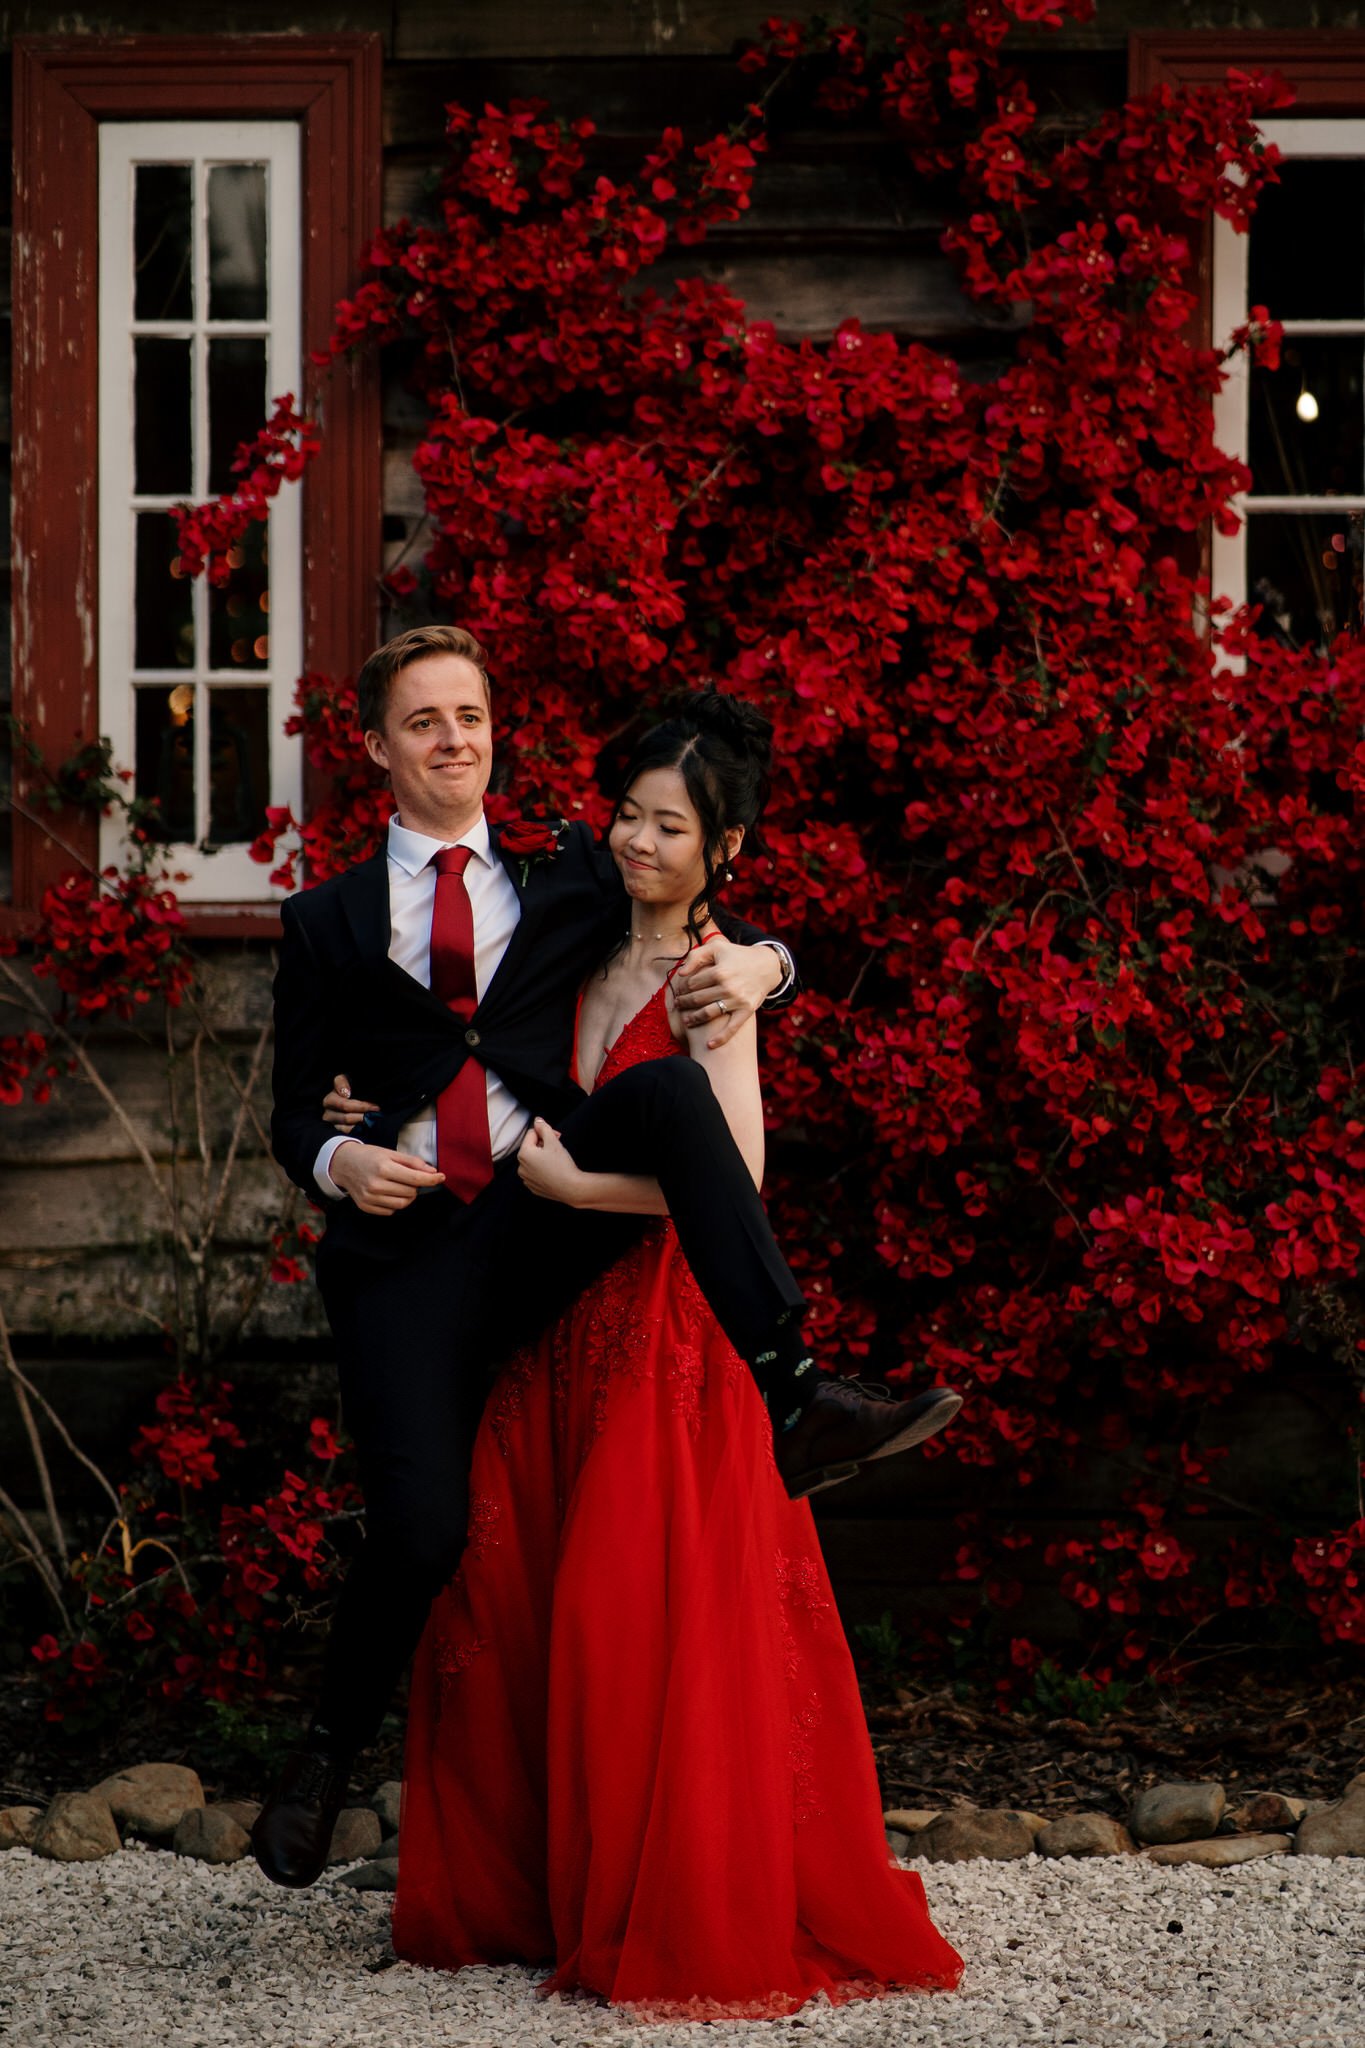 kumeu-valley-estate-auckland-wedding-venue-anada-new-zealand-asian-chinese-dear-white-productions-photography-videographer-gate-crashing-door-red-bag (95).jpg